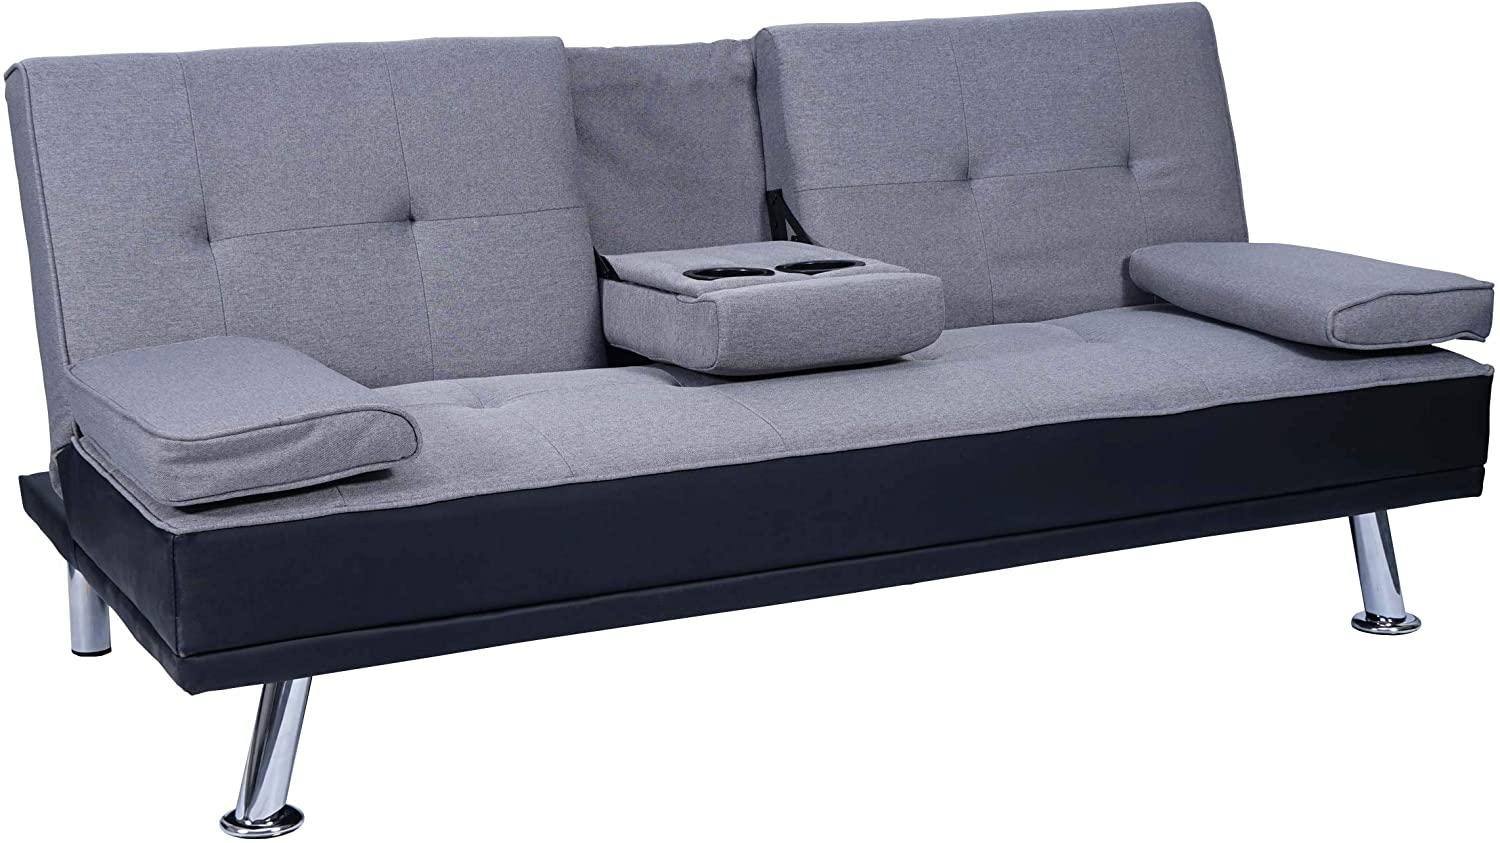 3er-Sofa HWC-F60, Couch Schlafsofa Gästebett, Tassenhalter verstellbar 97x166cm ~ Kunstleder/Textil, schwarz/hellgrau Bild 1